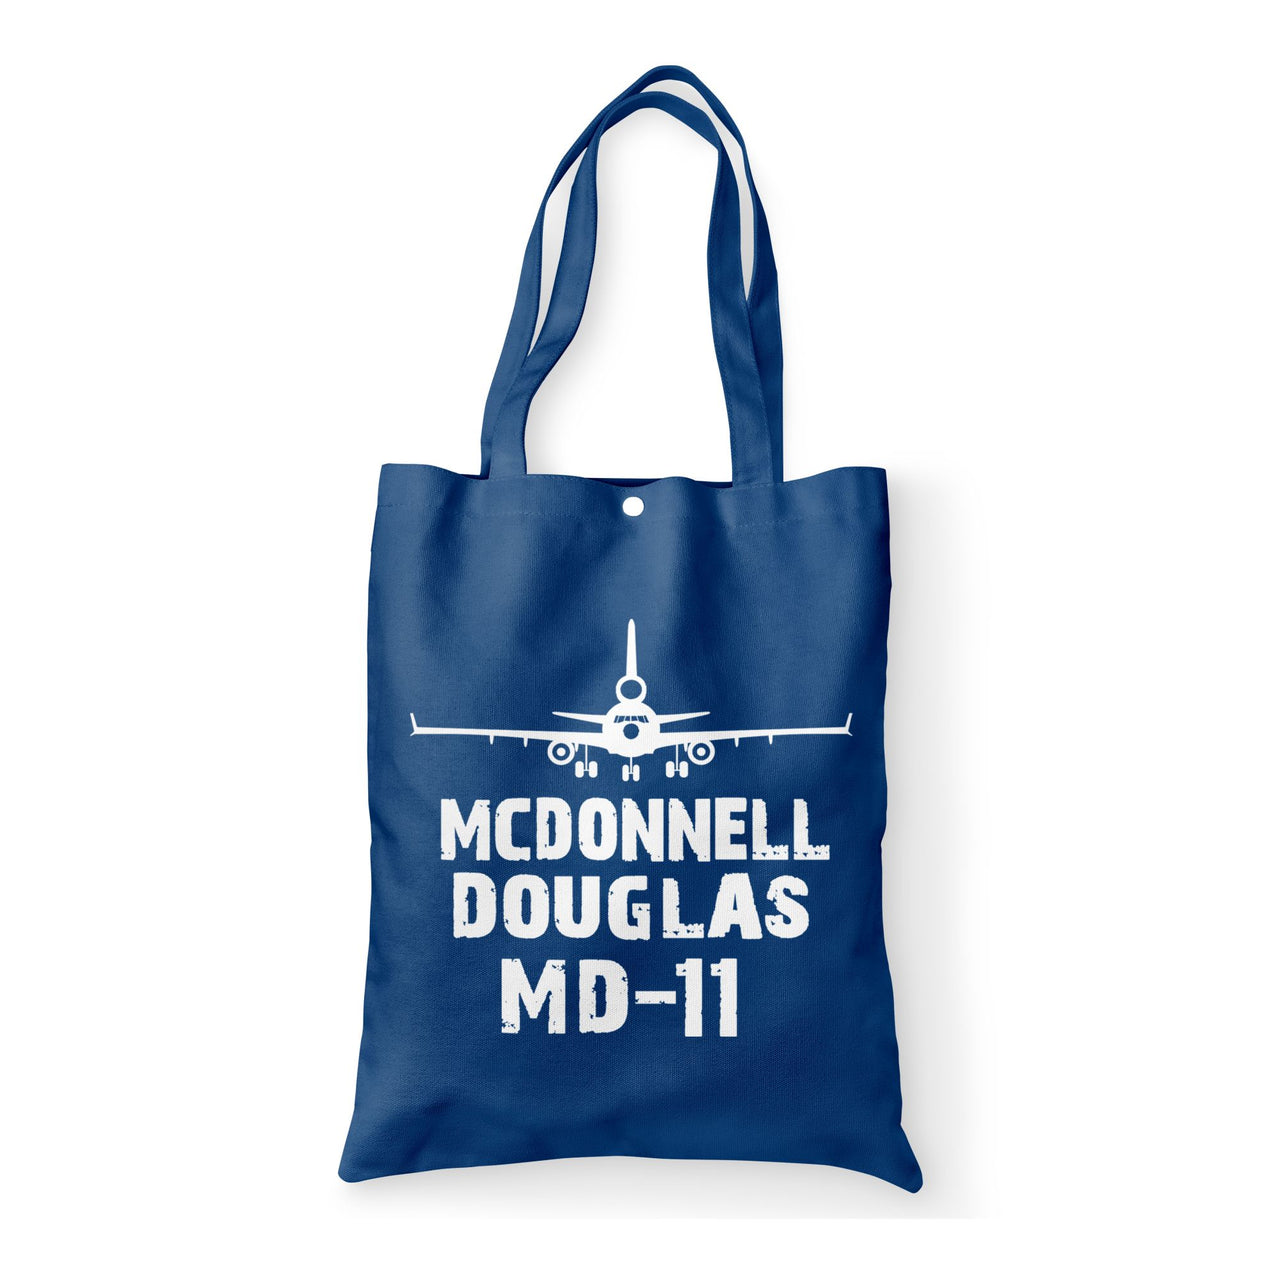 McDonnell Douglas MD-11 & Plane Designed Tote Bags